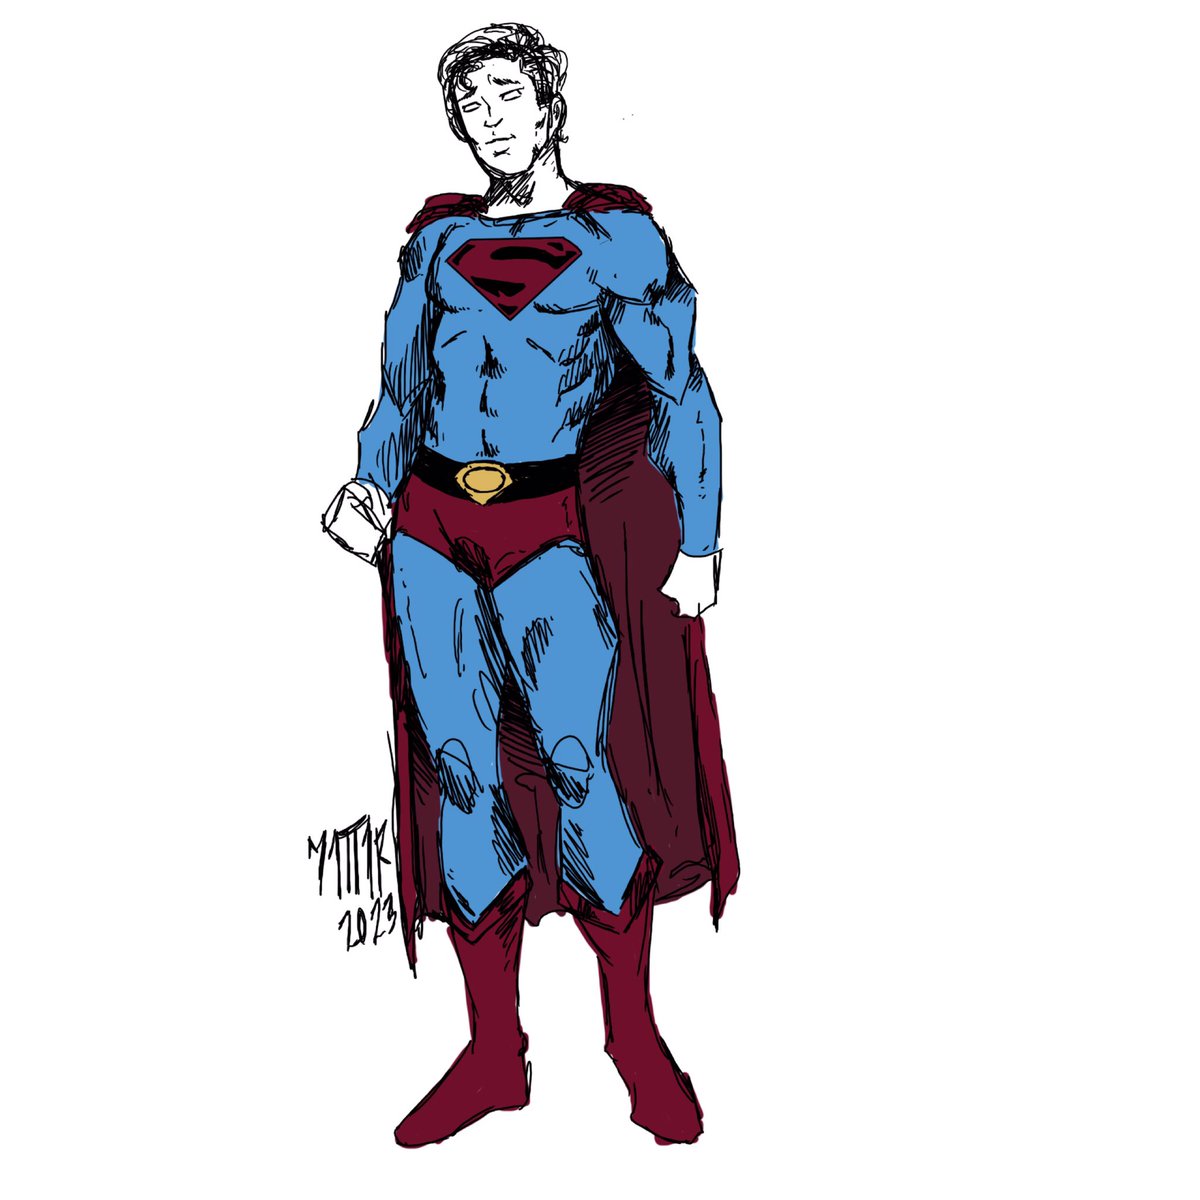 SUPER quick sketch of Josh Hartnetts superman while on break
#superman #Joshhartnett #clarkkent #dccomics #art #procreate 
@itsRyanUnicomb